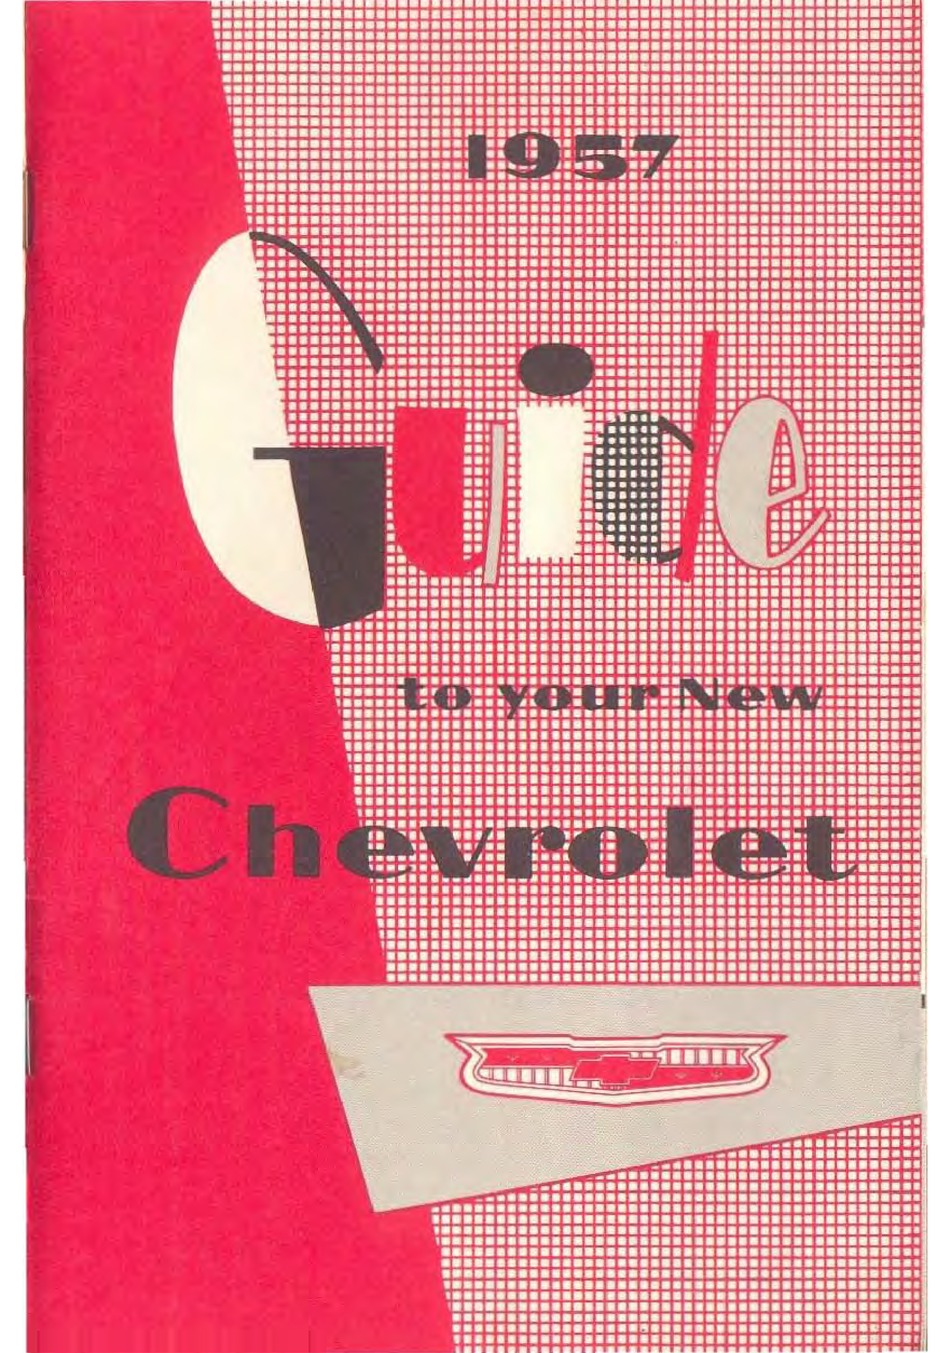 CHEVROLET 1957 OWNER'S MANUAL Pdf Download | ManualsLib